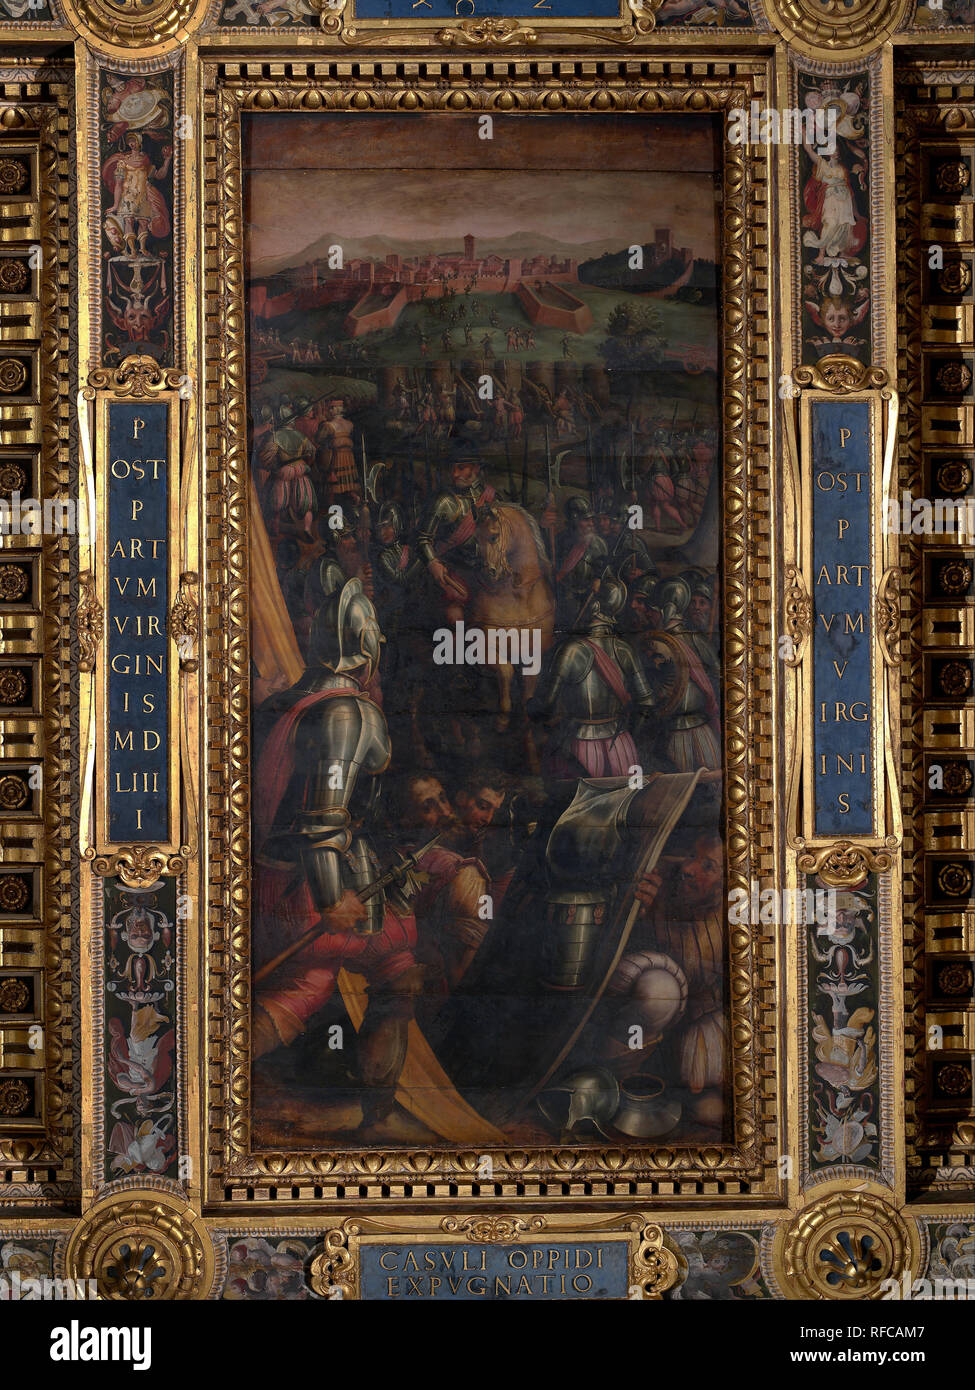 Capture of Casole. Date/Period: 1563 - 1565. Oil painting on wood. Height: 540 mm (21.25 in); Width: 250 mm (9.84 in). Author: Giorgio Vasari. VASARI, GIORGIO. Stock Photo